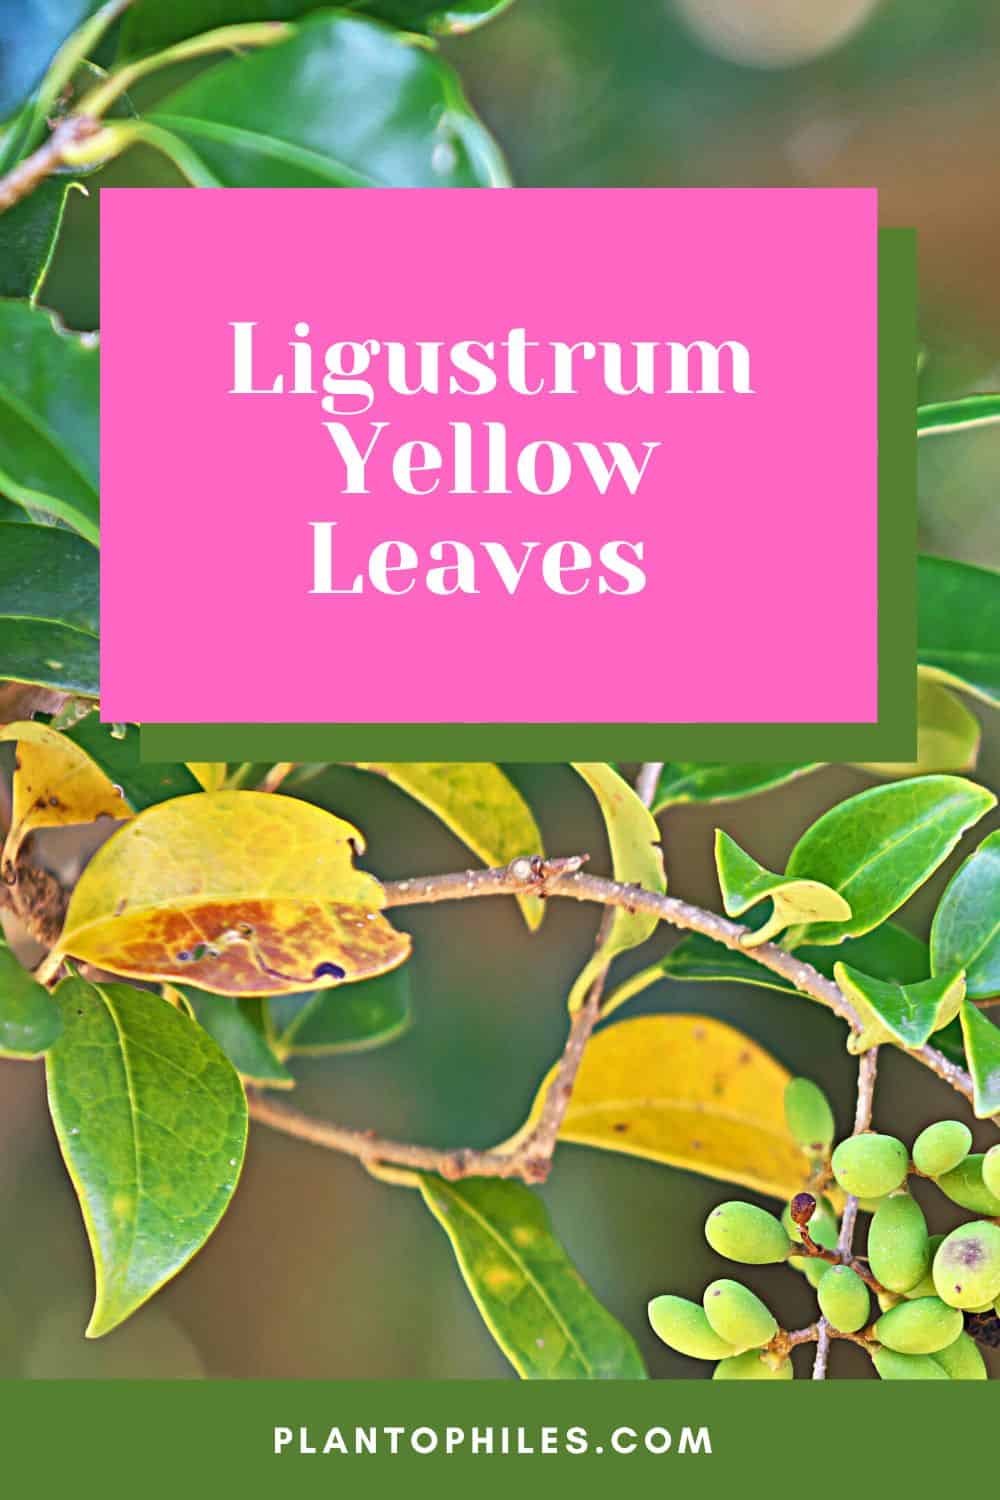 Ligustrum Yellow Leaves